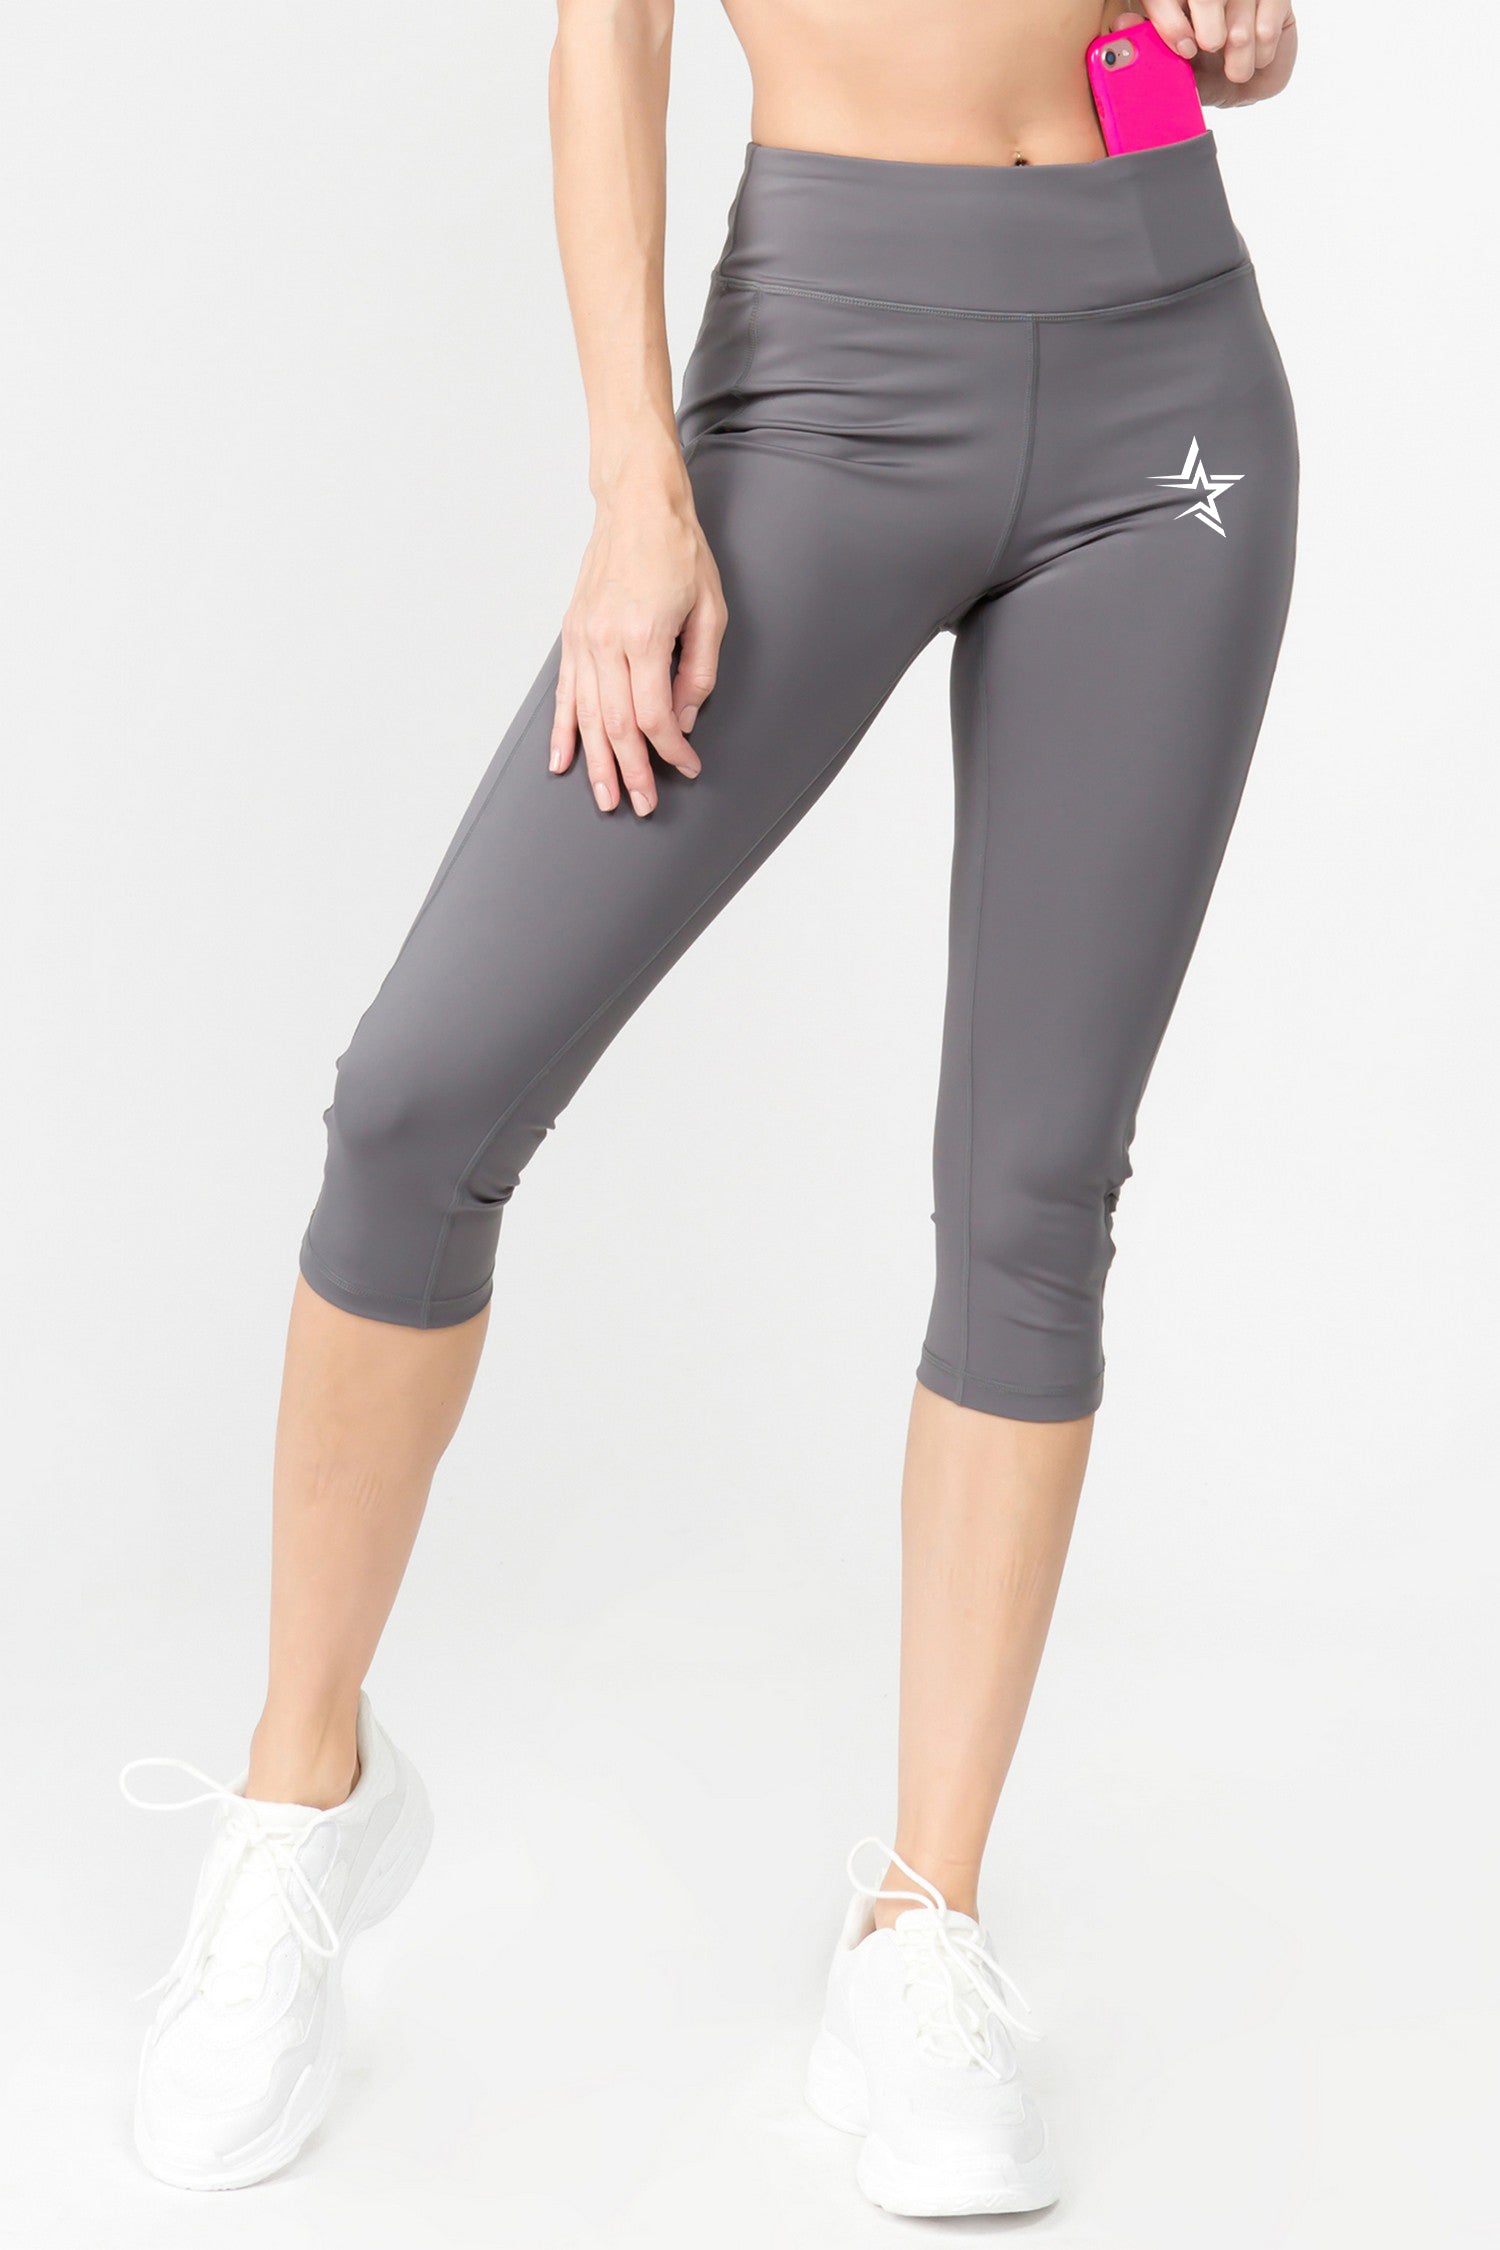 Active Lattice Capri Cutout Workout Leggings – Golden Star Yoga